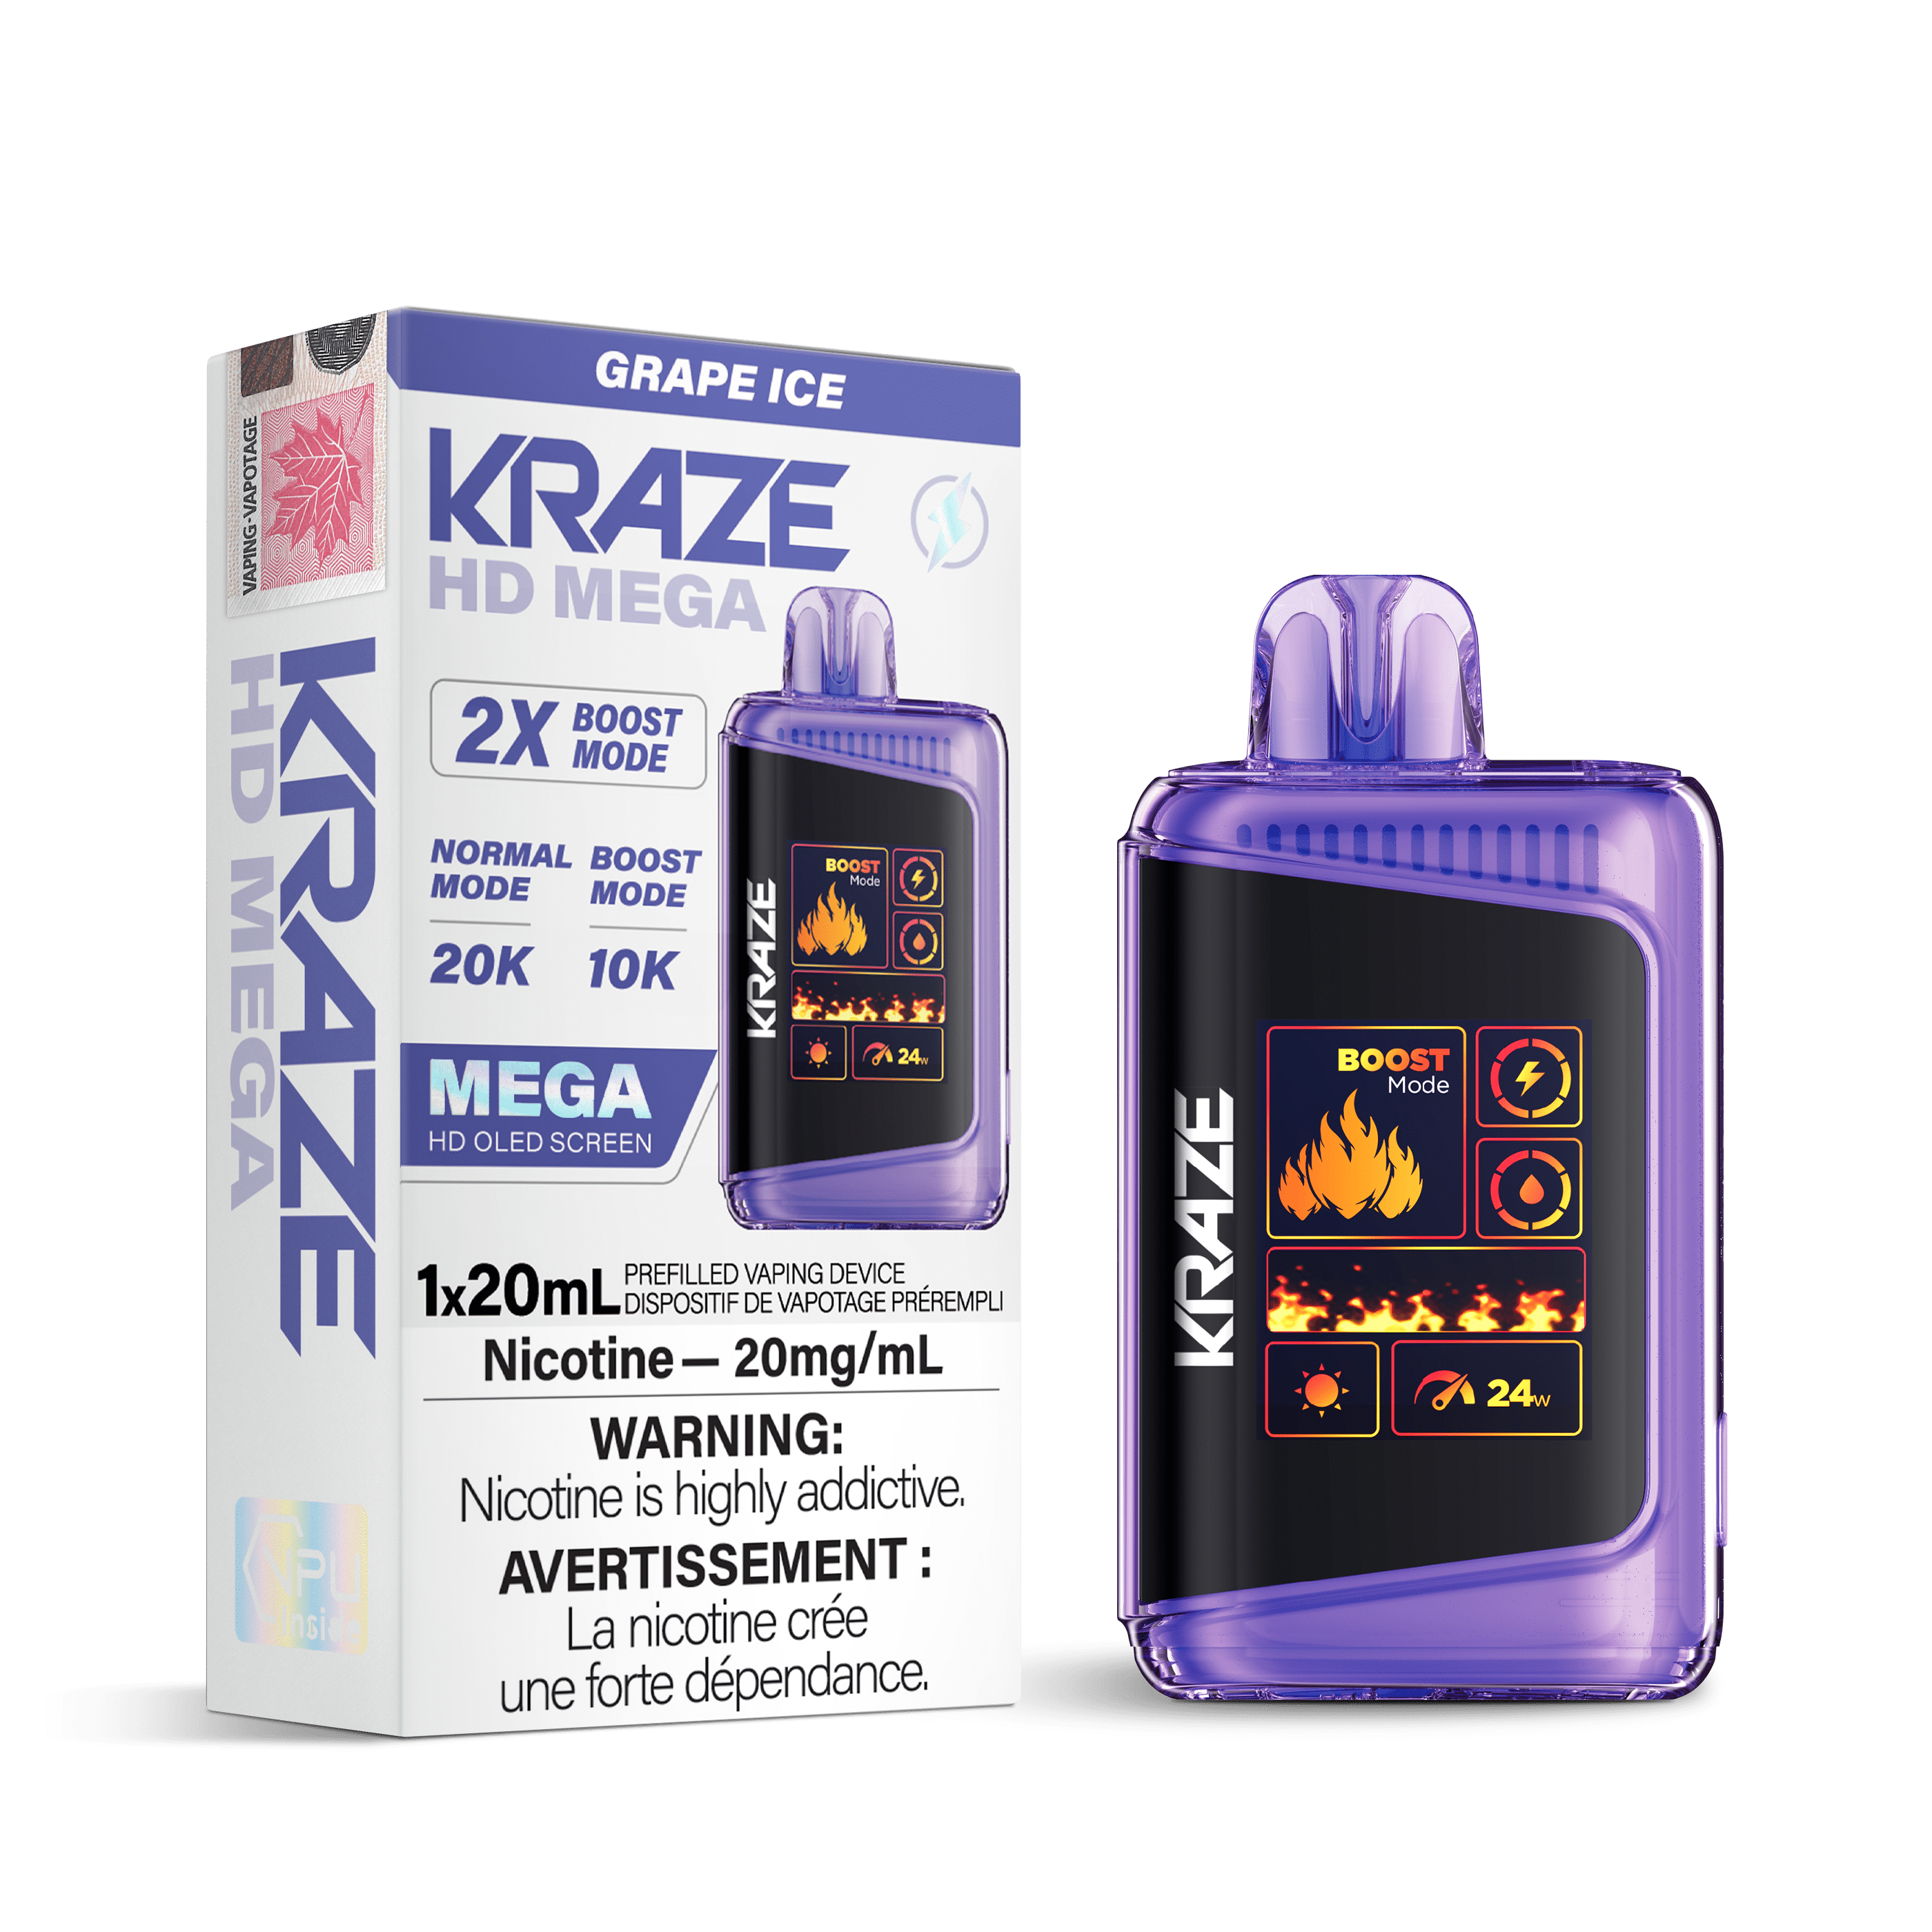 Kraze HD Mega - Grape Ice Disposable Vape available on Canada online vape shop